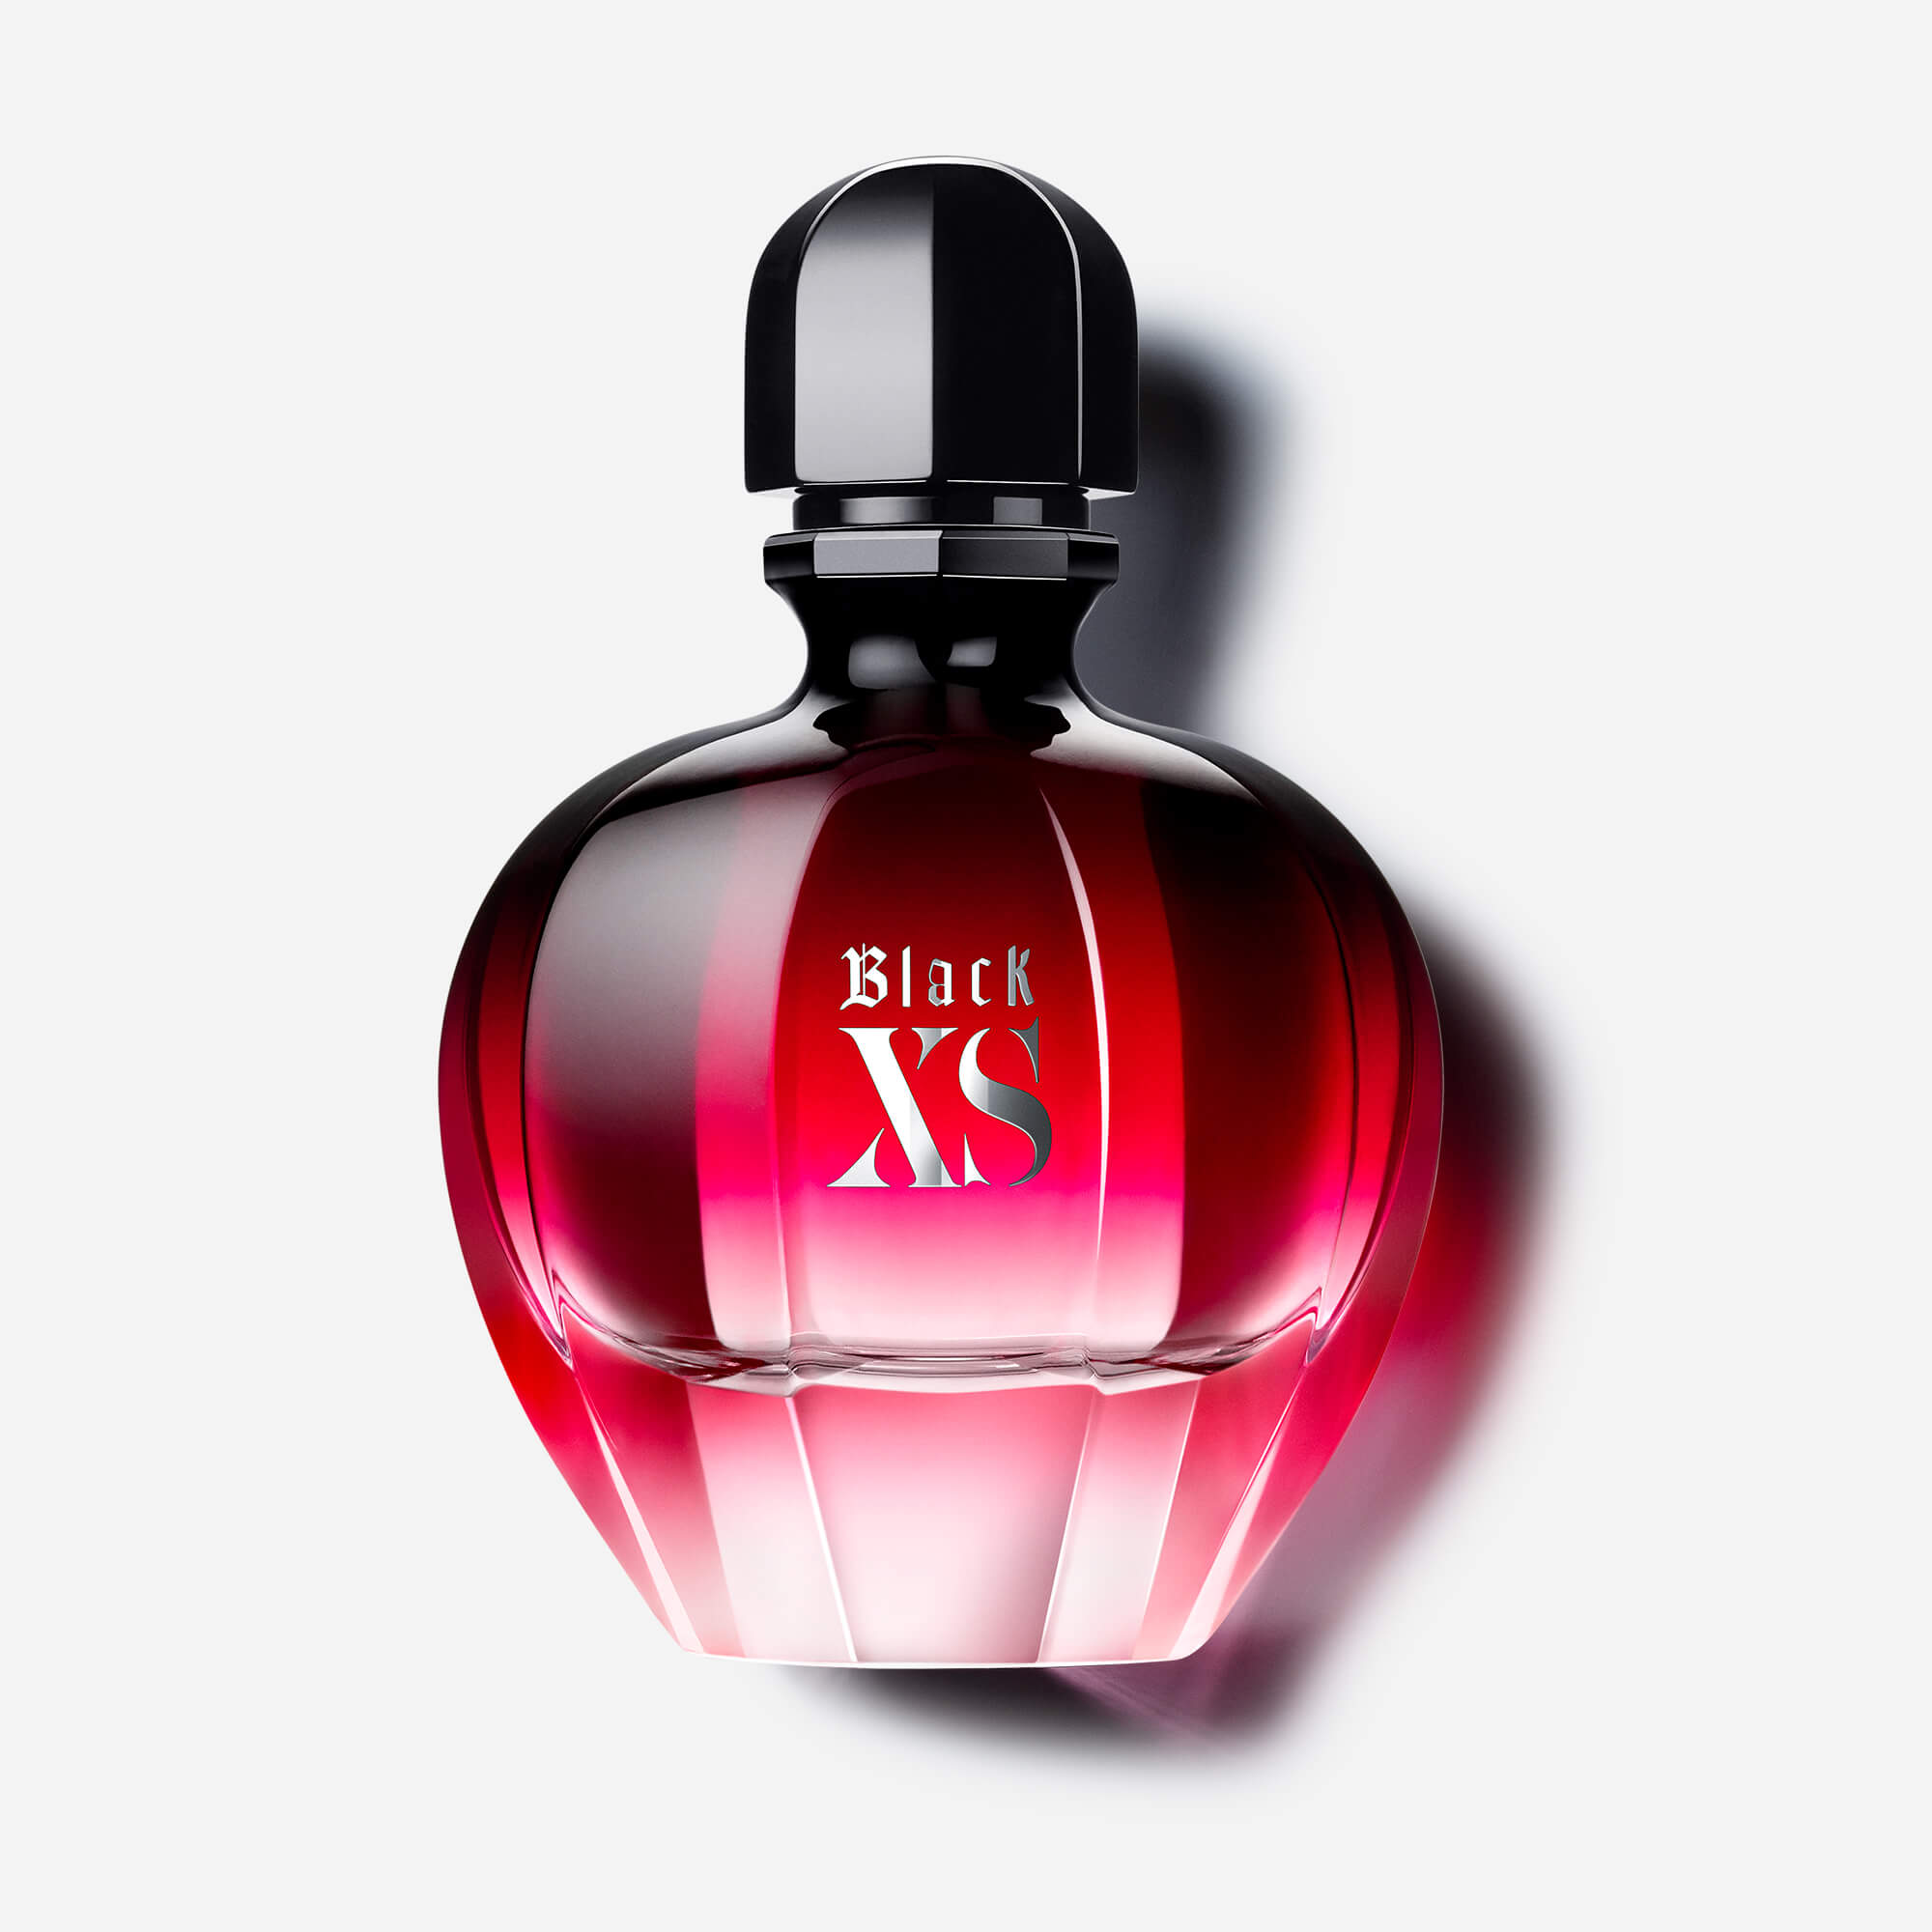 Paco Rabanne Black XS Eau De Parfum for Women (80 ml) Paco Rabanne